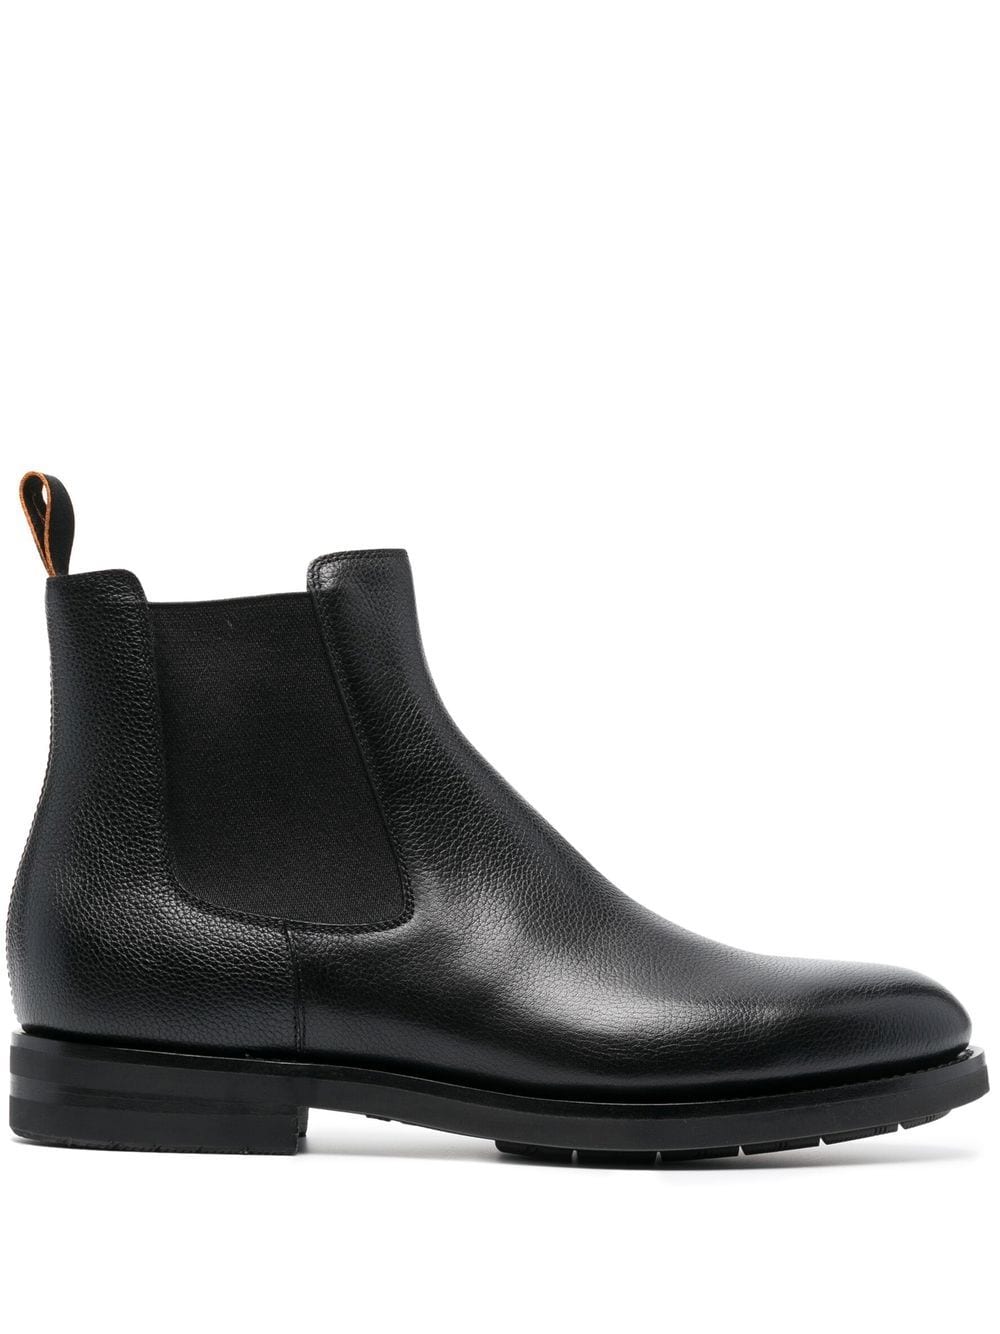 Santoni leather Chelsea boots - Black von Santoni